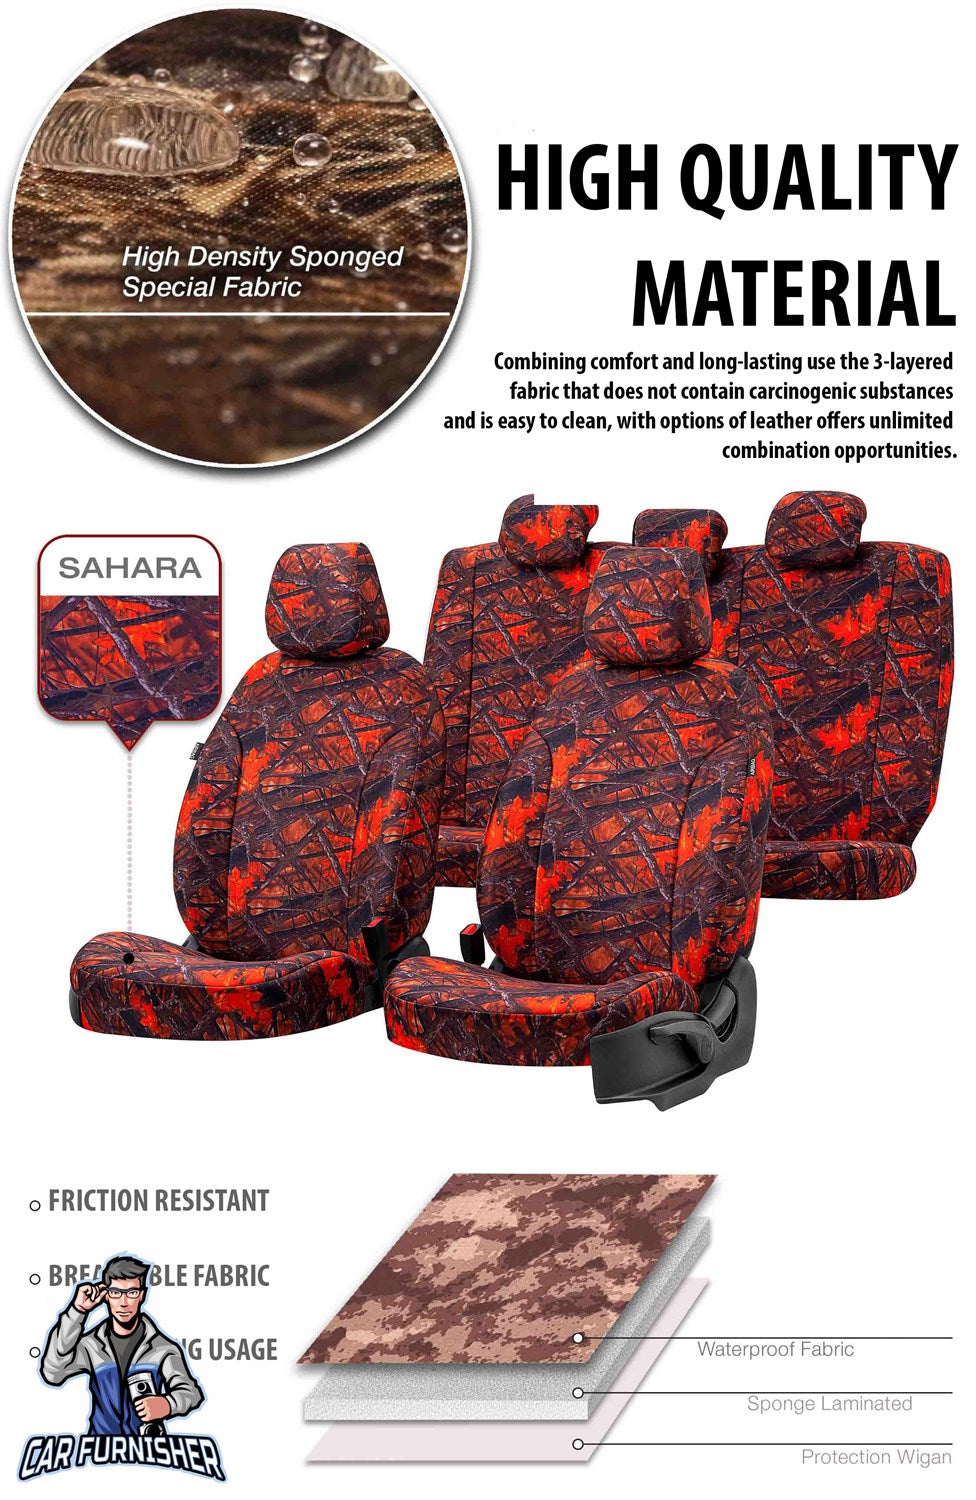 Bmw X6 Seat Cover Camouflage Waterproof Design Mojave Camo Waterproof Fabric